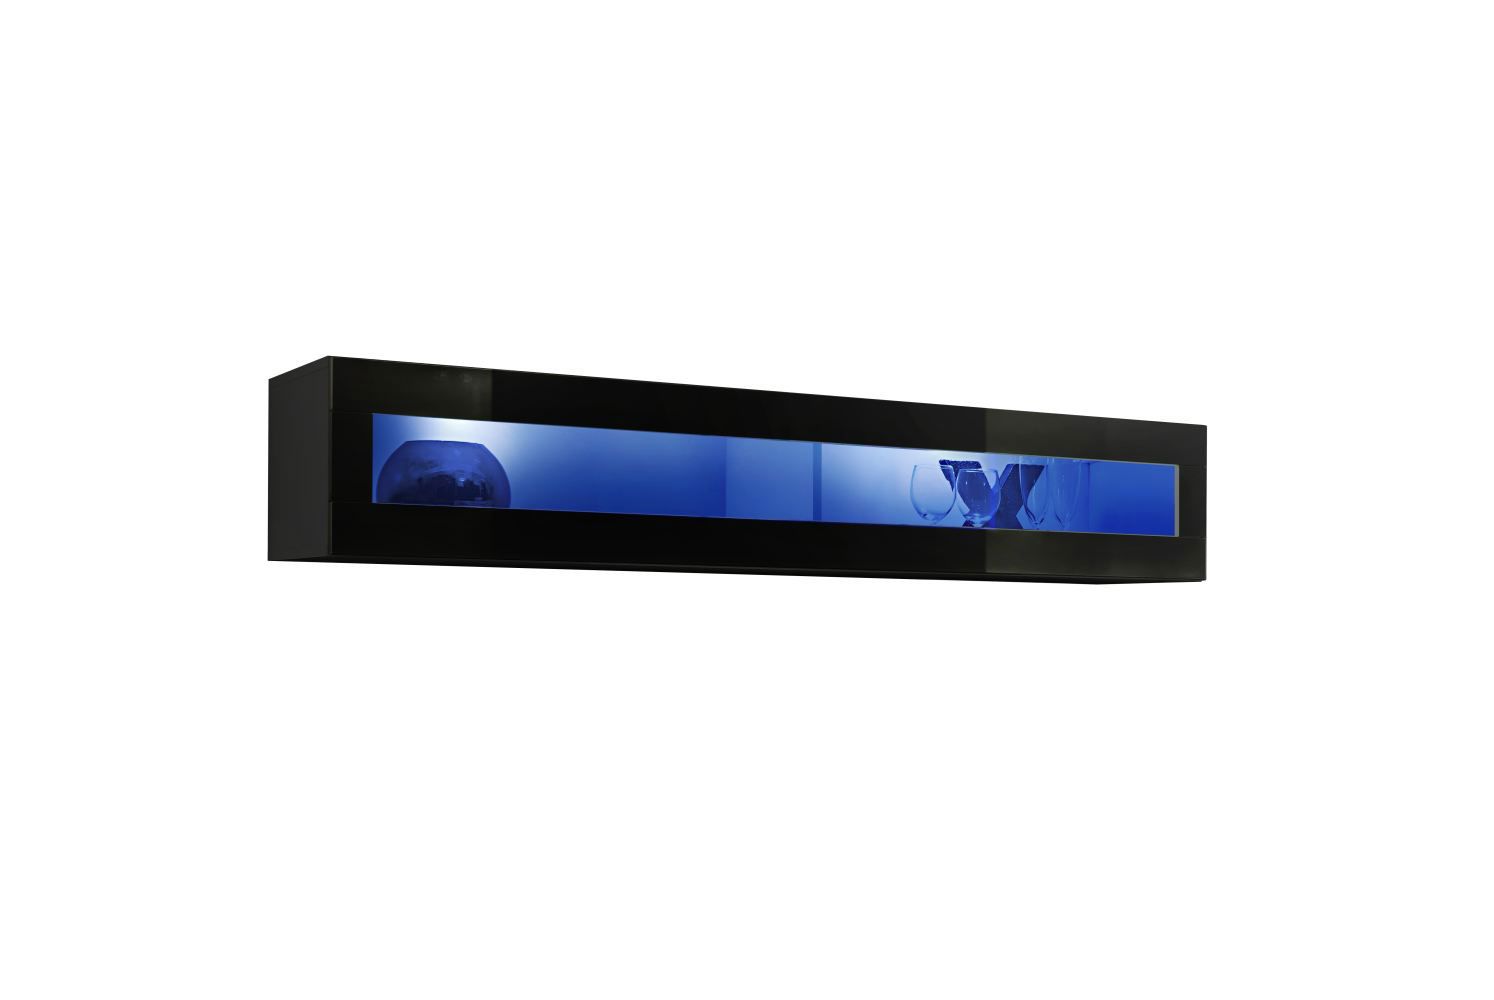 Stylish Raudberg 40 wall cabinet, color: black - Dimensions: 30 x 160 x 29 cm (H x W x D), with blue LED lighting